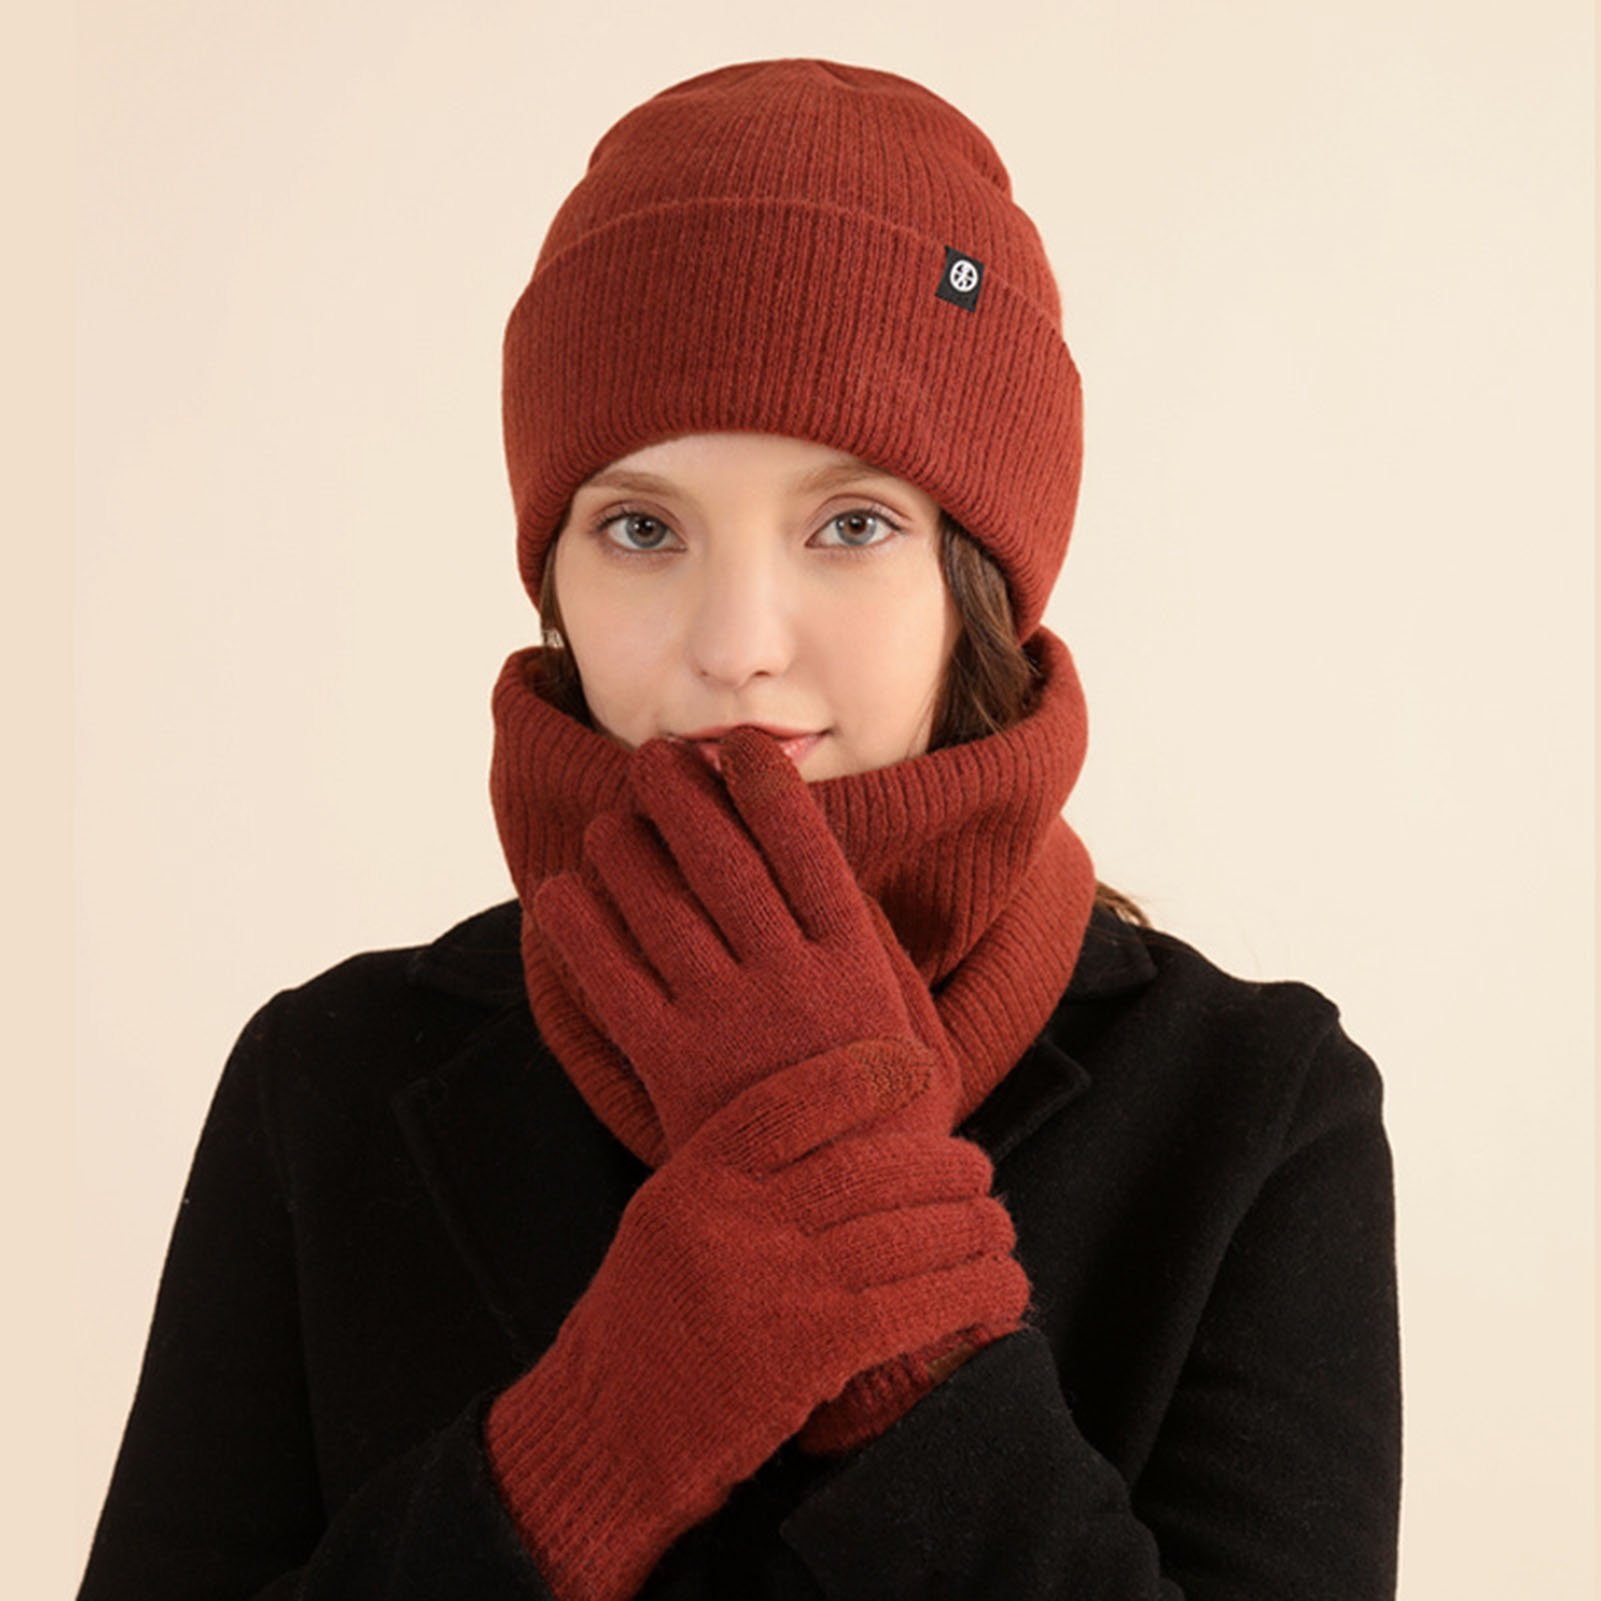 Rutaqian Schlupfmütze Unisex Beanie Strickmütze Winterschal Thermo Handschuhe (3-in-1 Winter-Set) Warme Knit Hut Loop Schal Rutschfeste Handschuhe Karamell